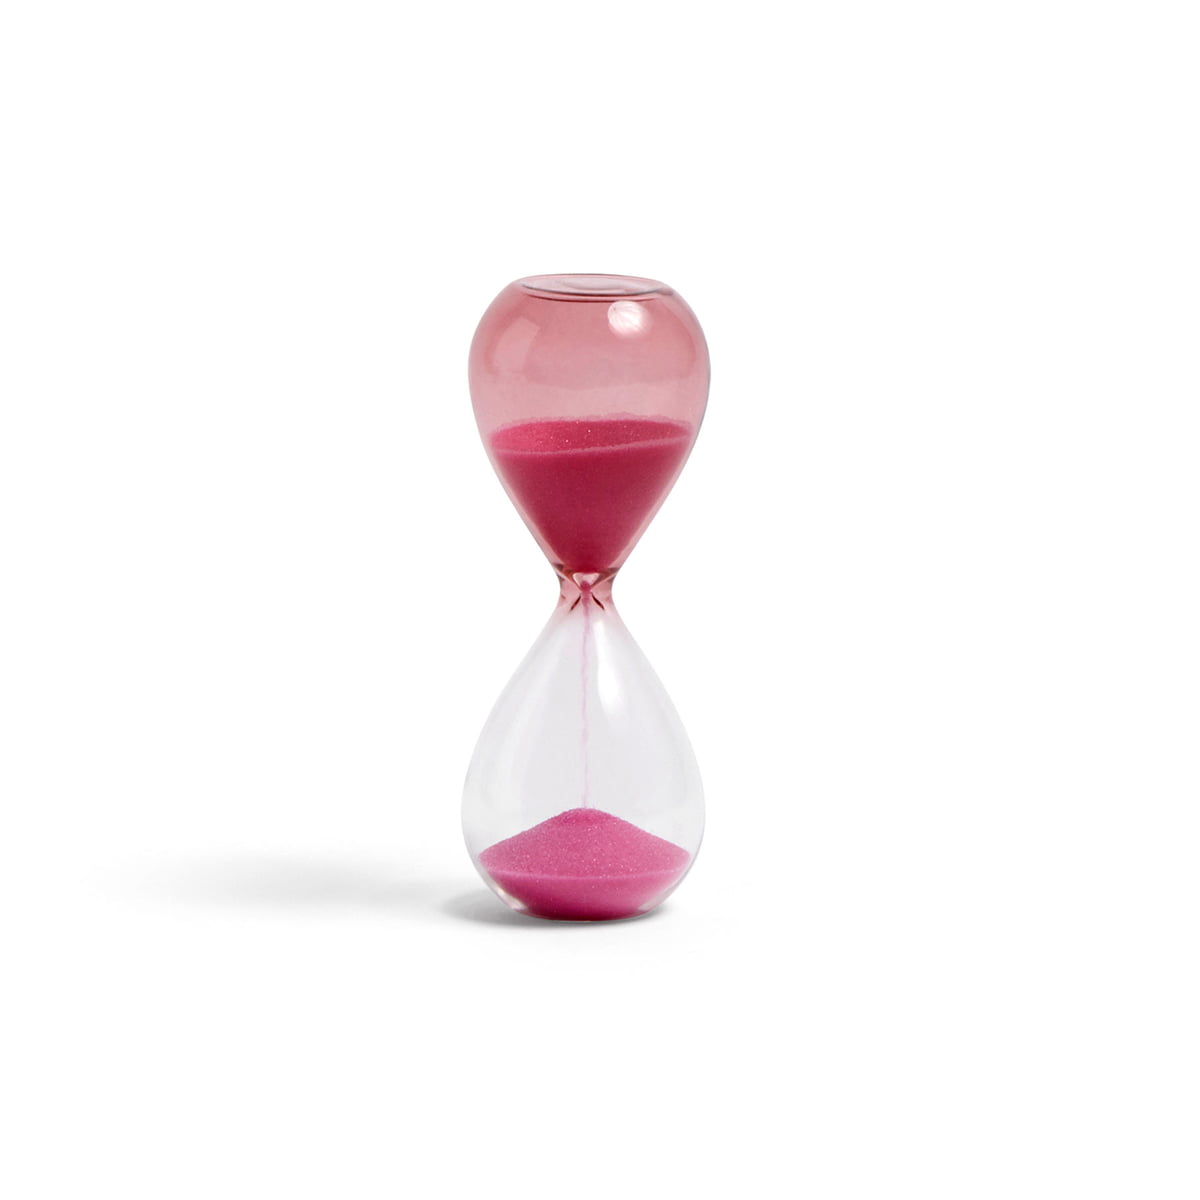 HAY - Time Sanduhr S, pink (2019)